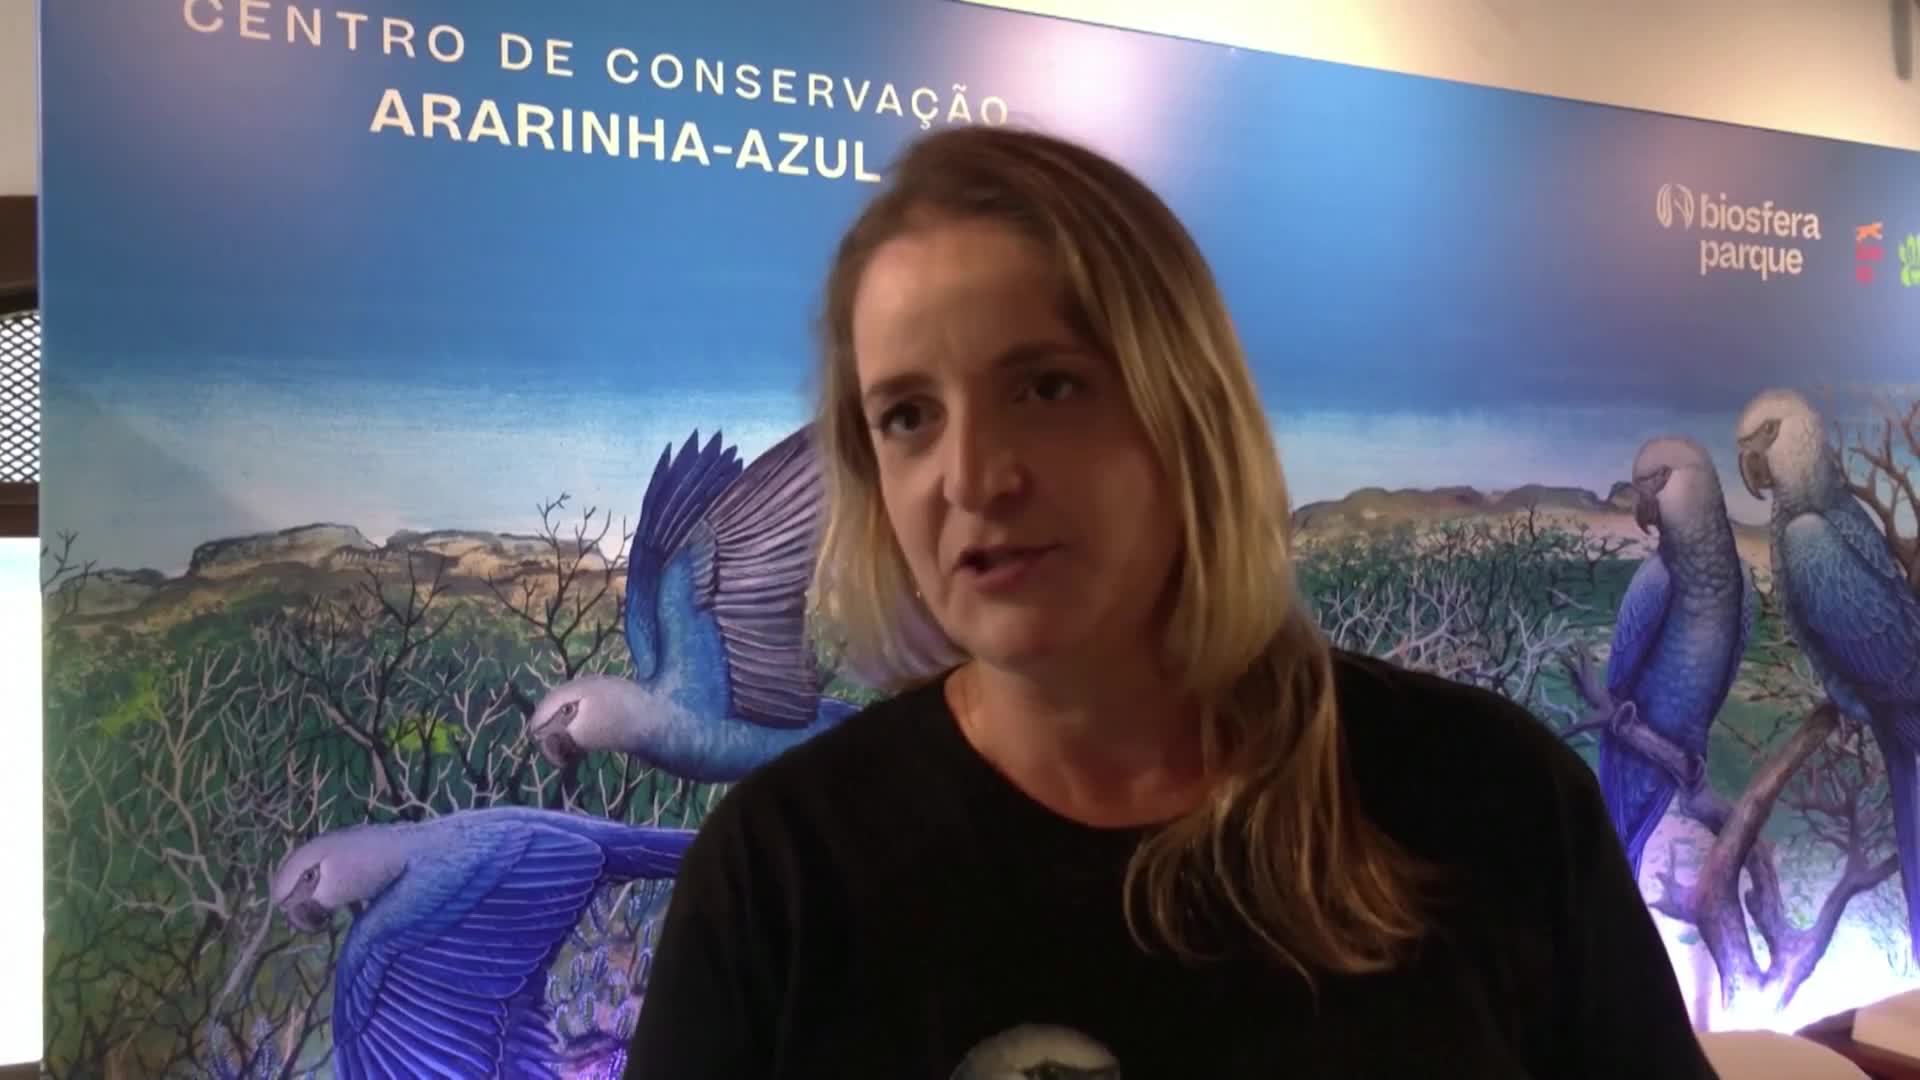 Зоопаркът в Сао Пауло приюти критично застрашен вид папагали (ВИДЕО)